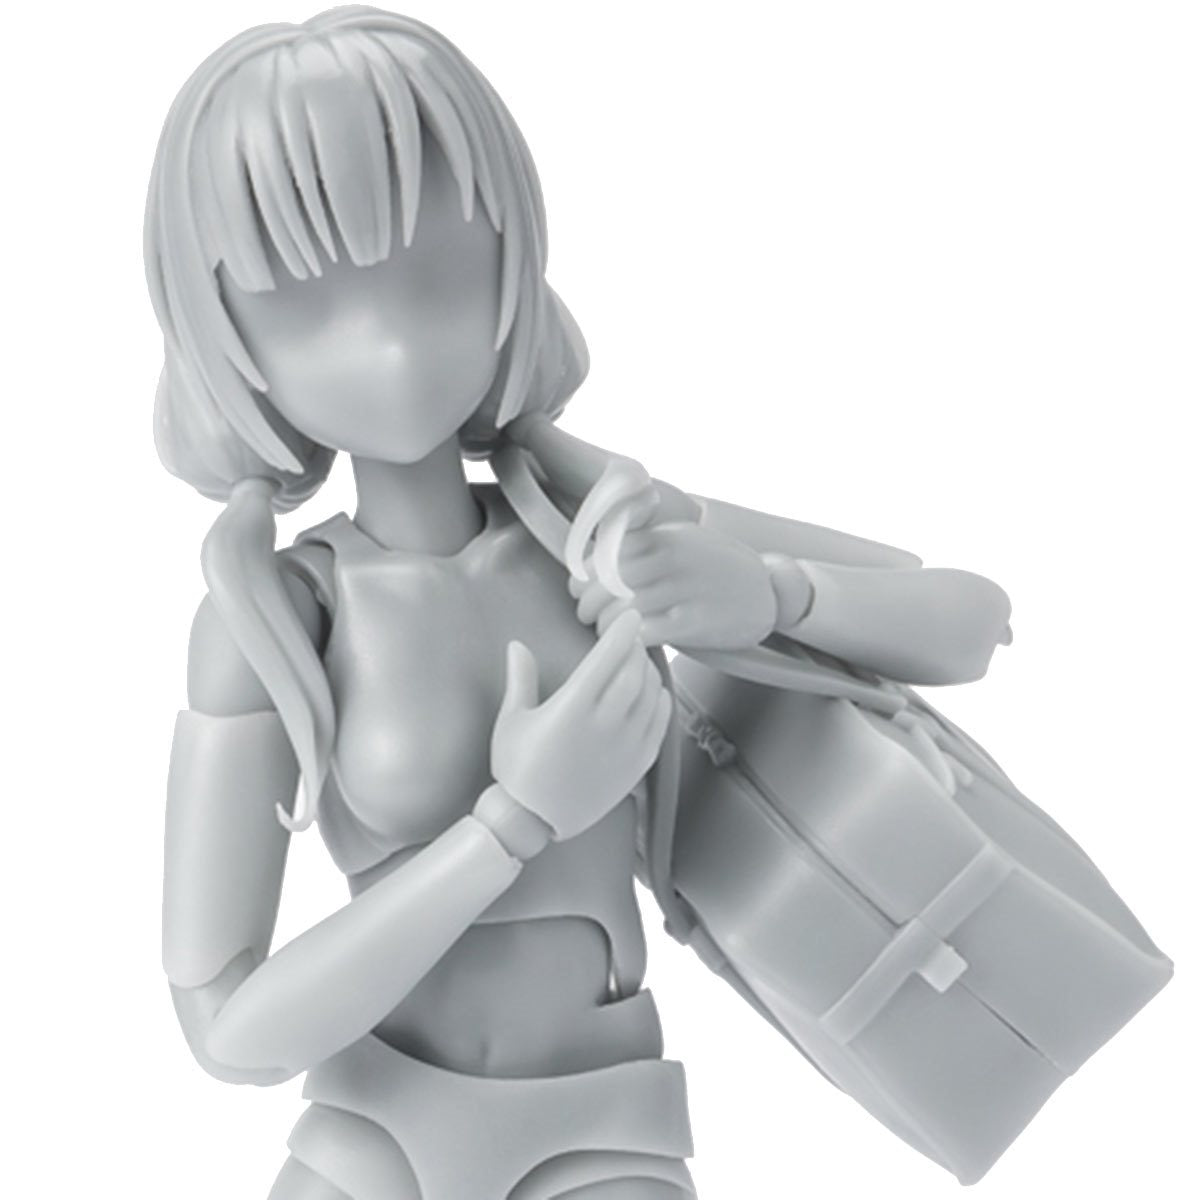 Body-kun Action Figure Bandai Tamashii Nations (School Life Edition DX Set Gray Color Ver.) S.H.Figuarts